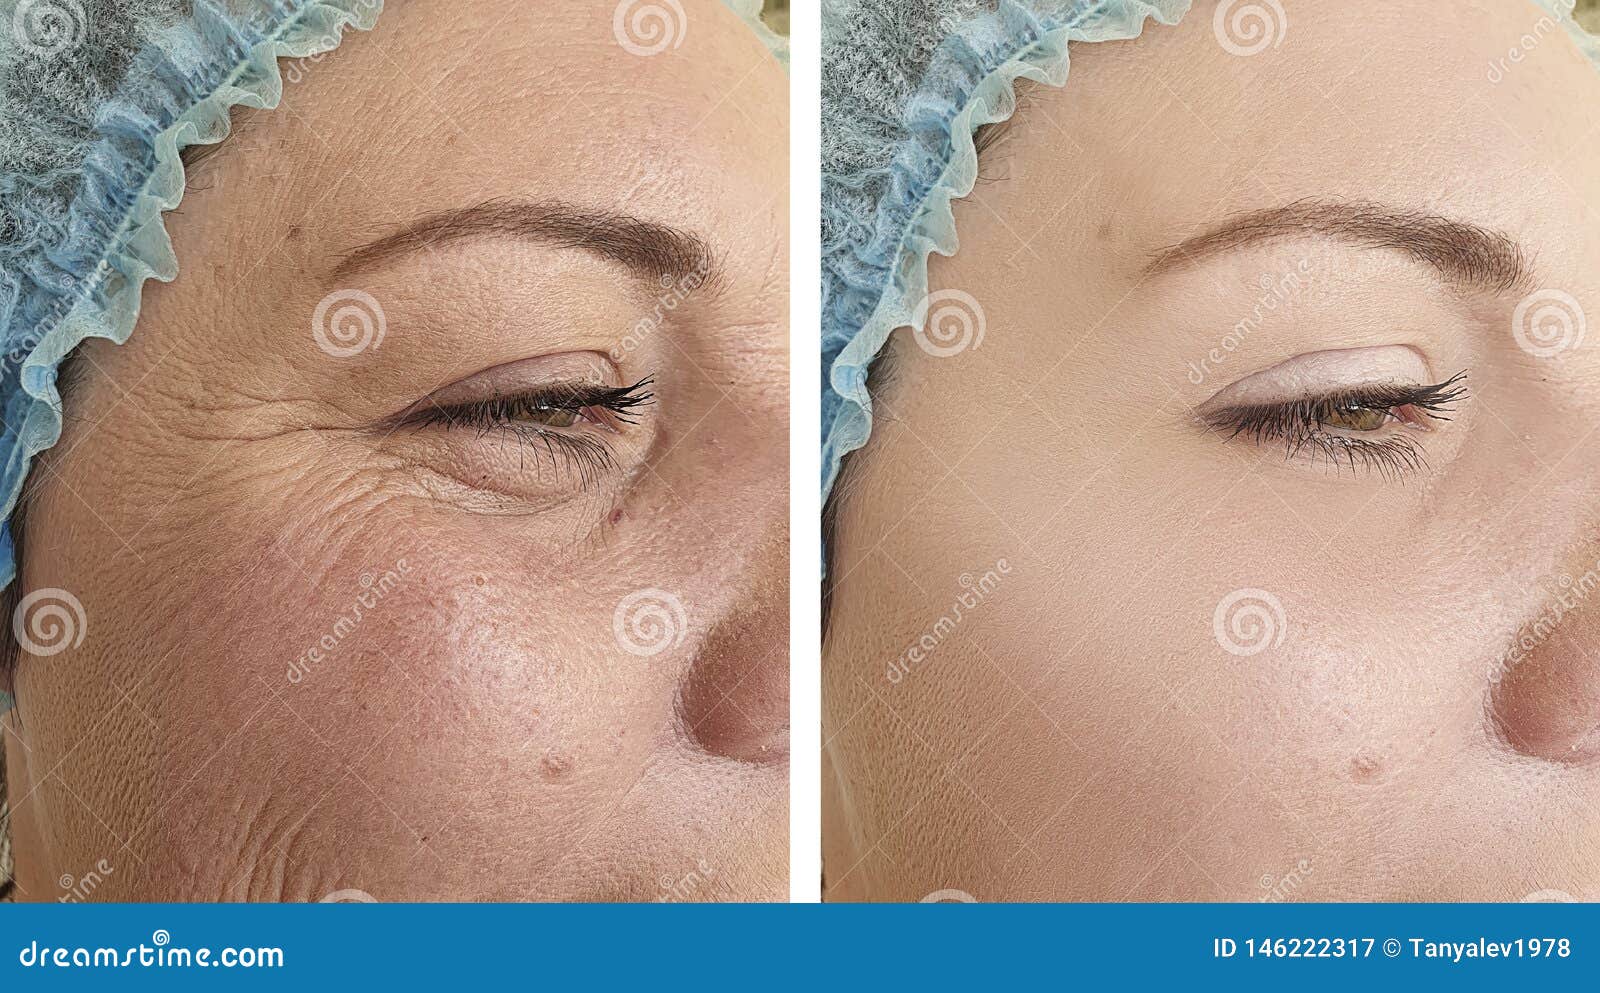 woman elderlyface wrinkles  correction before after lifting biorevitalization regeneration antiaging treatment